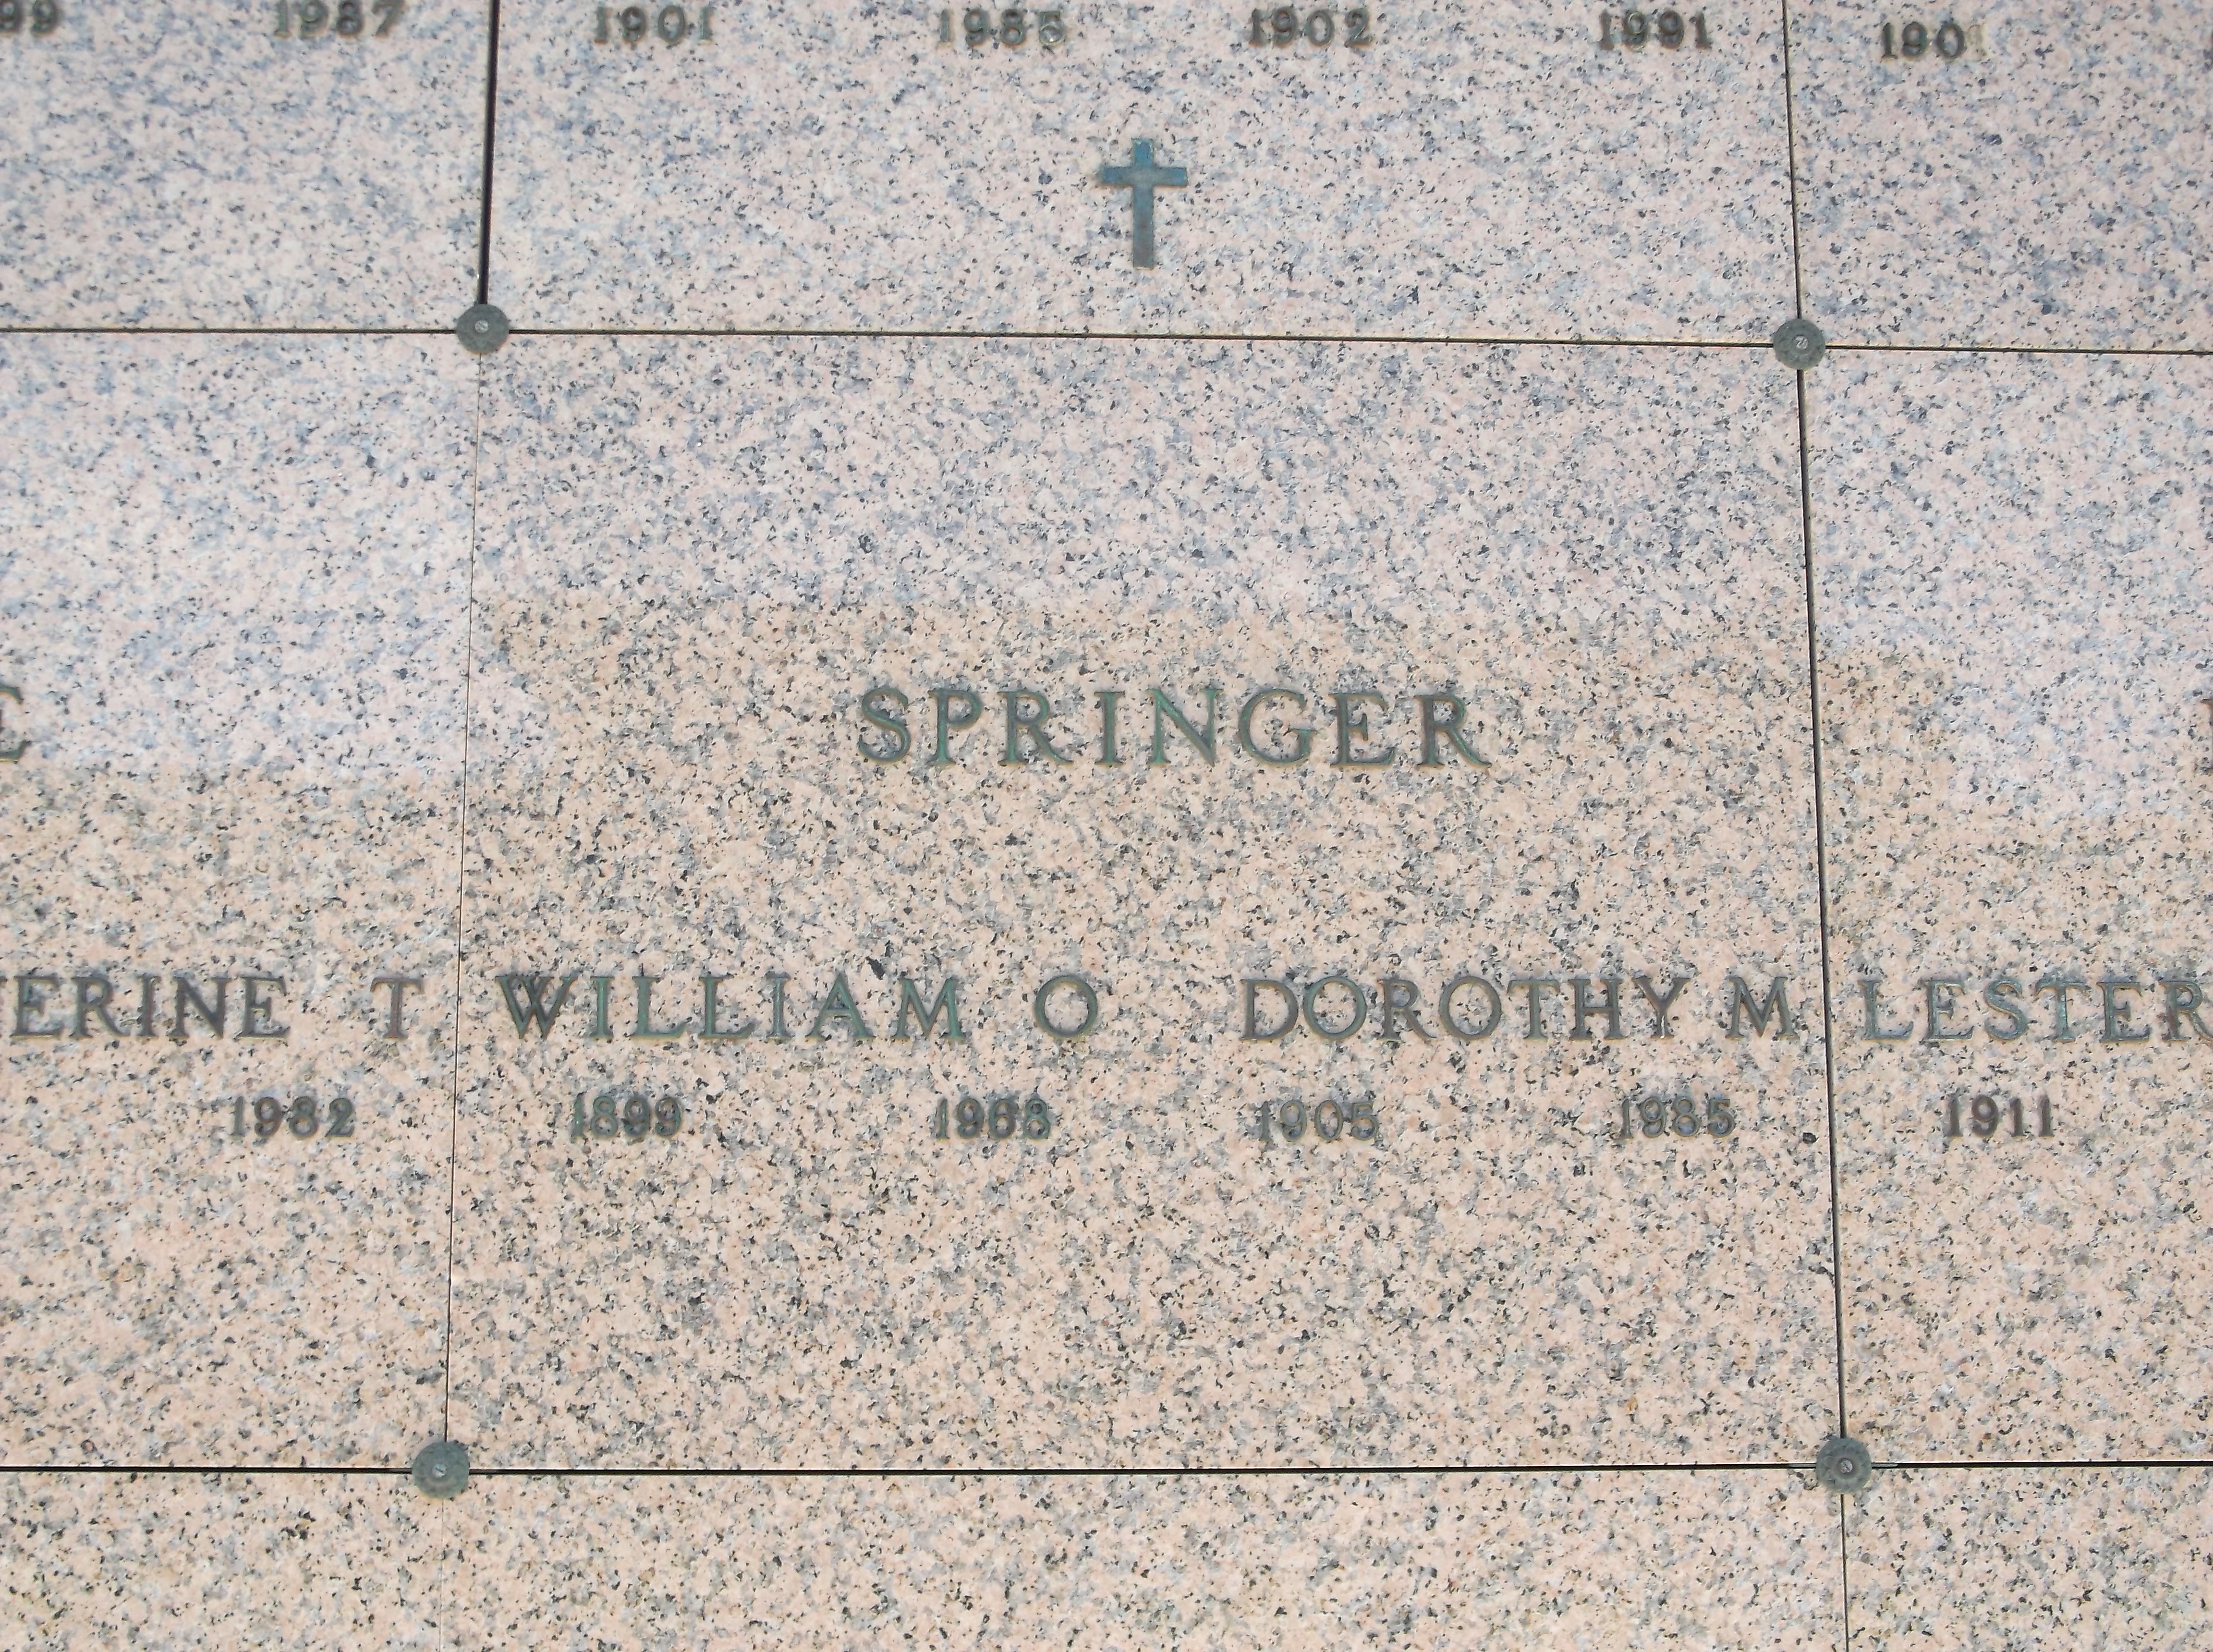 William O Springer